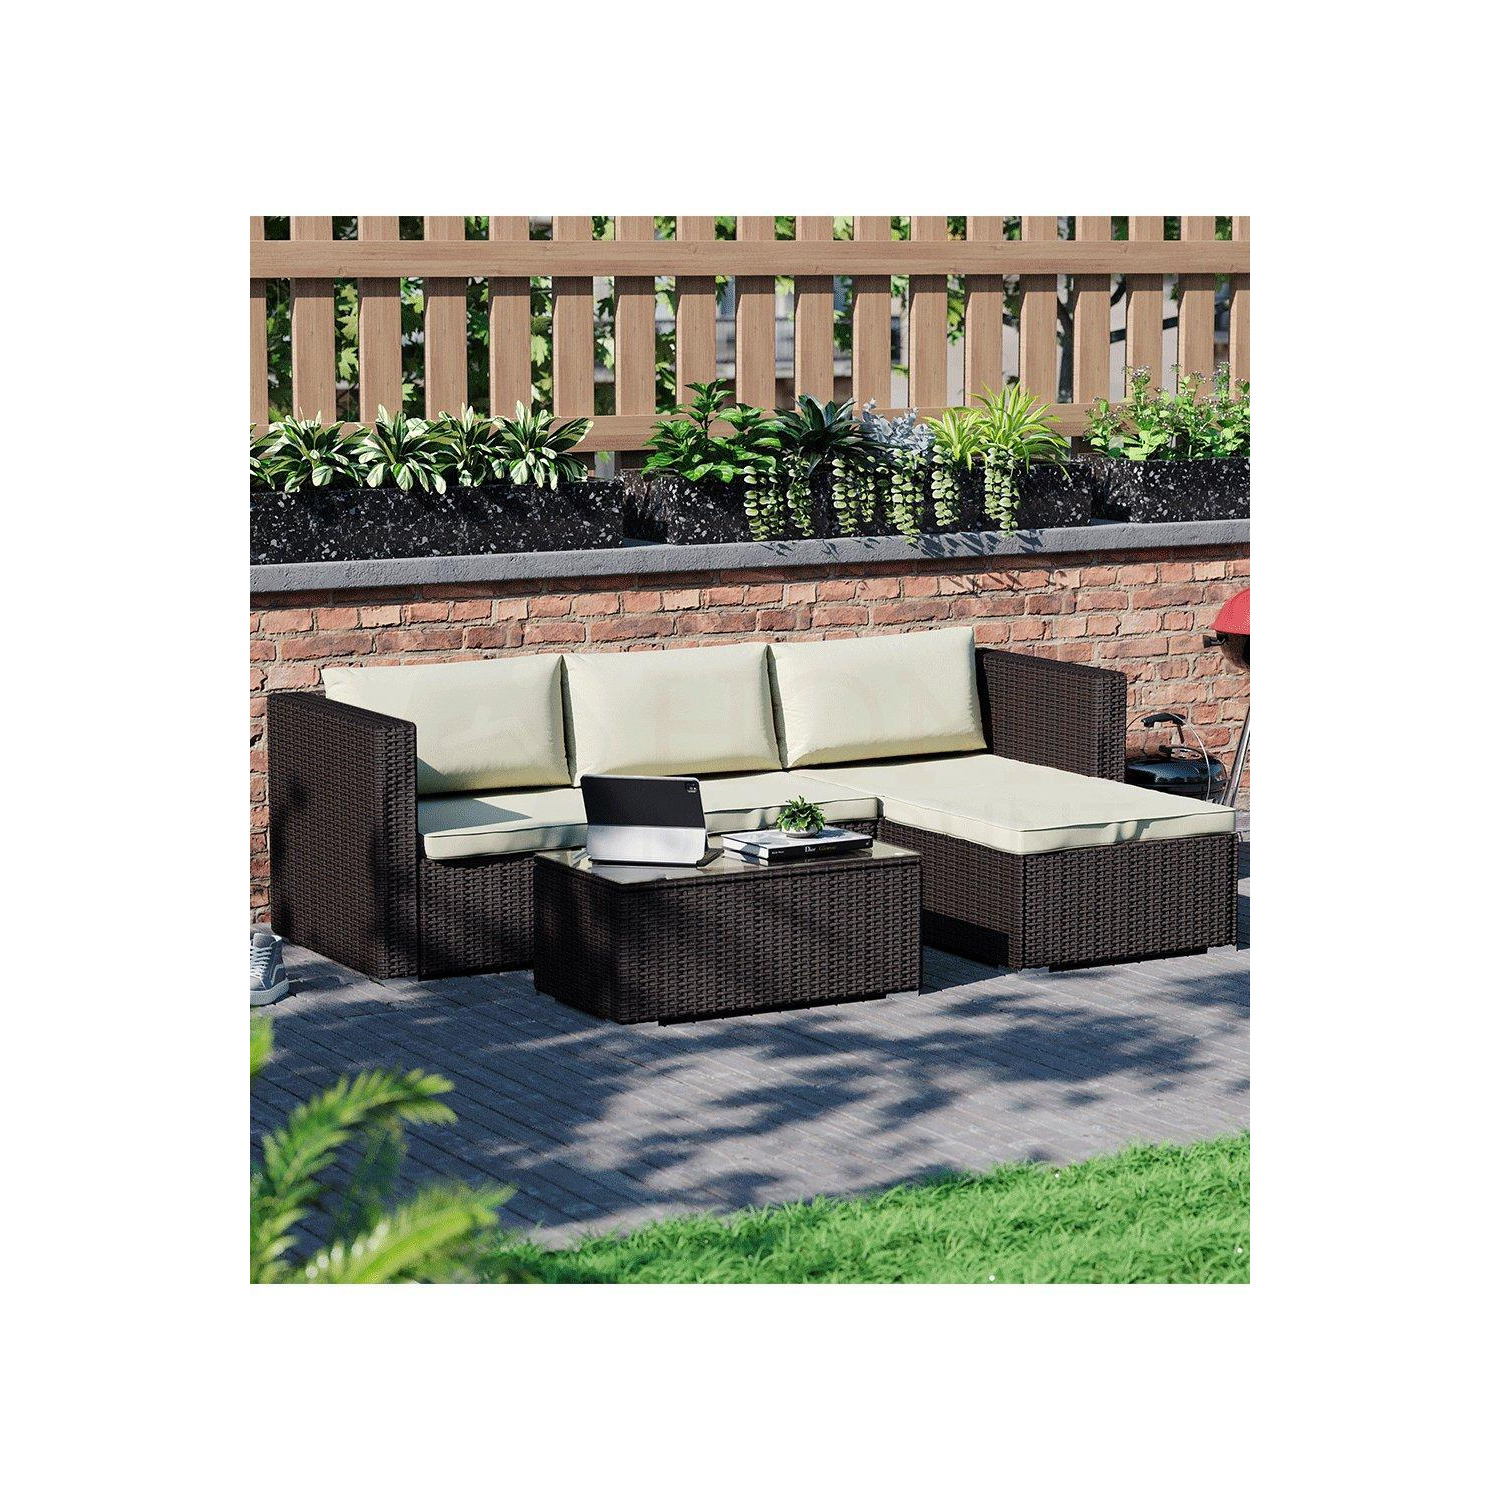 5 Pc and Cover - Garden Vida Hampton 4 Seater Corner Rattan Set & Outdoor Patio Furniture Cover - image 1